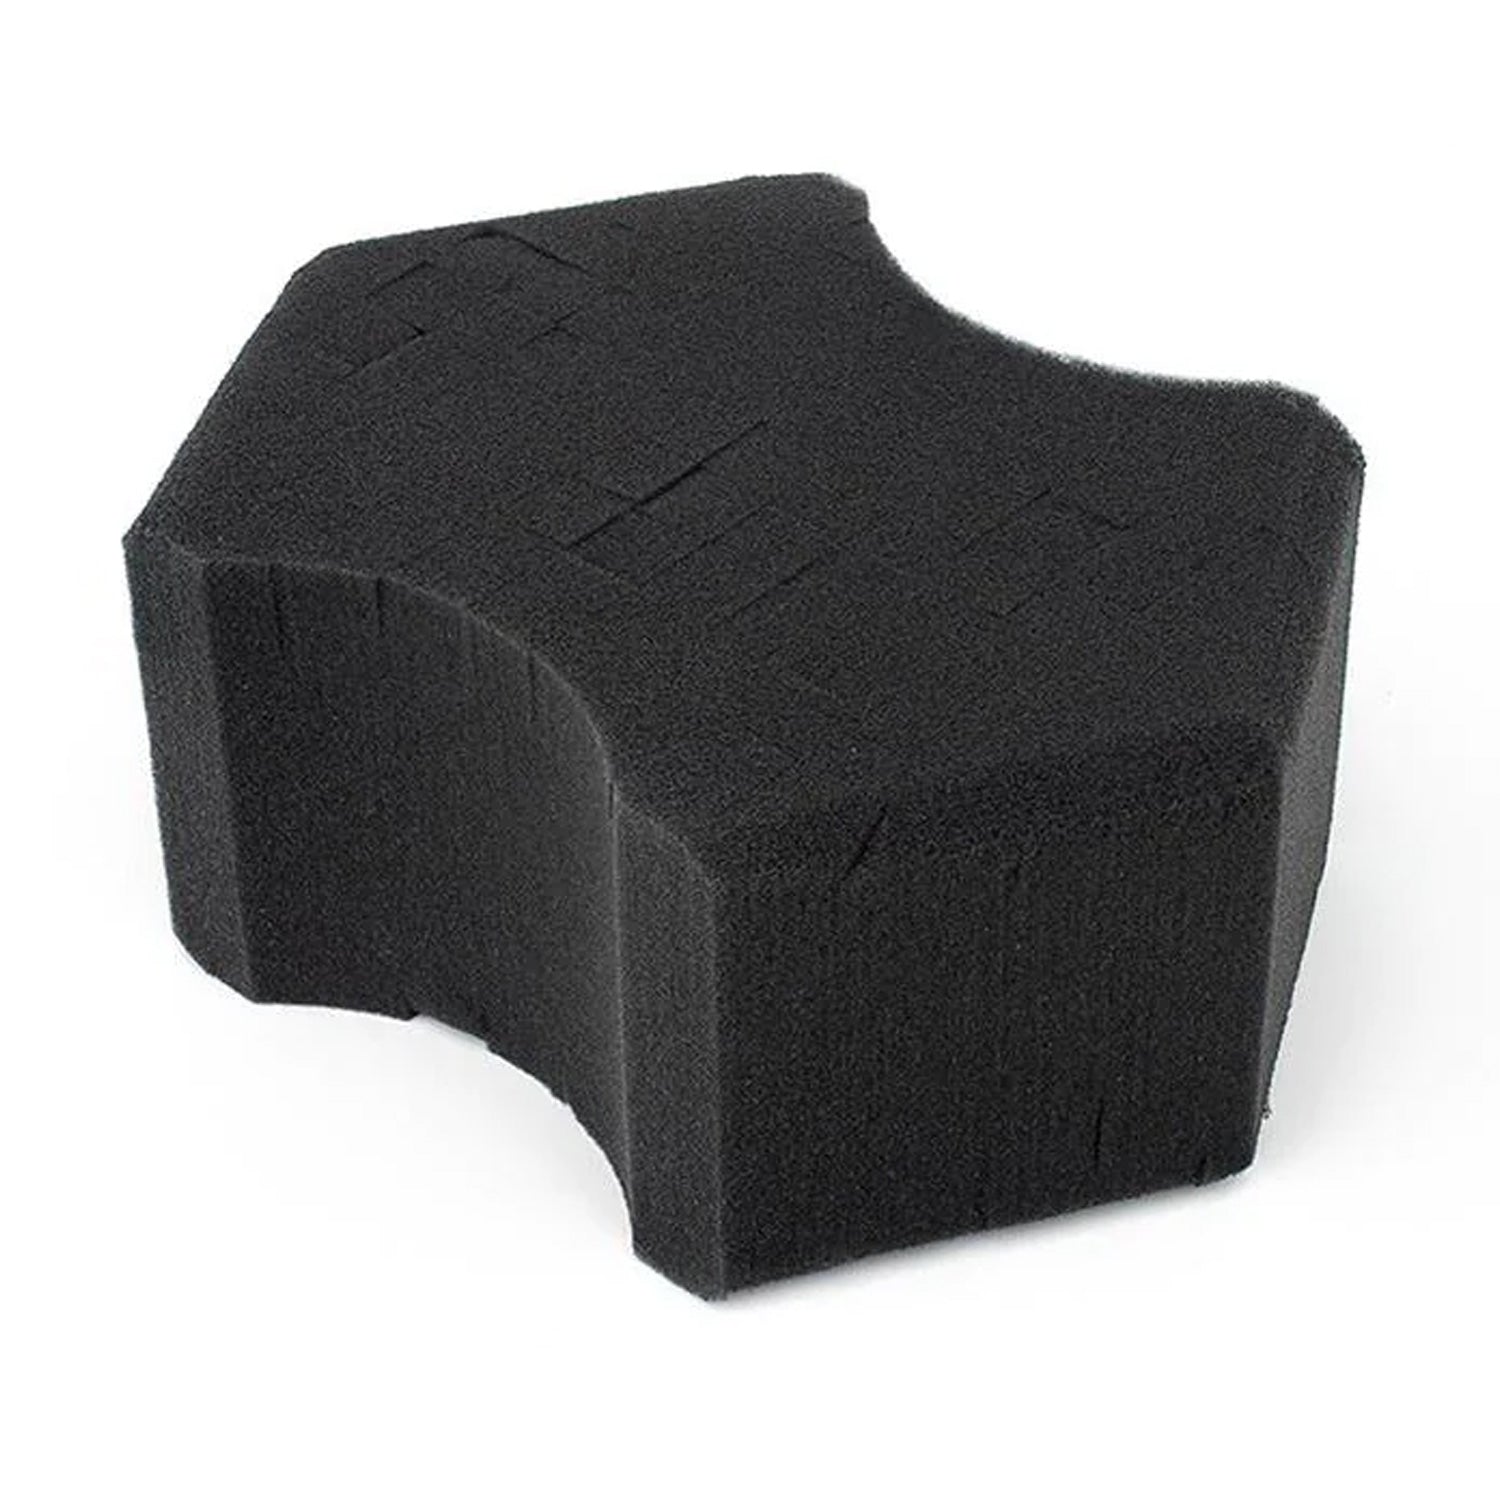 ultra-black-sponge-with-cut-interior